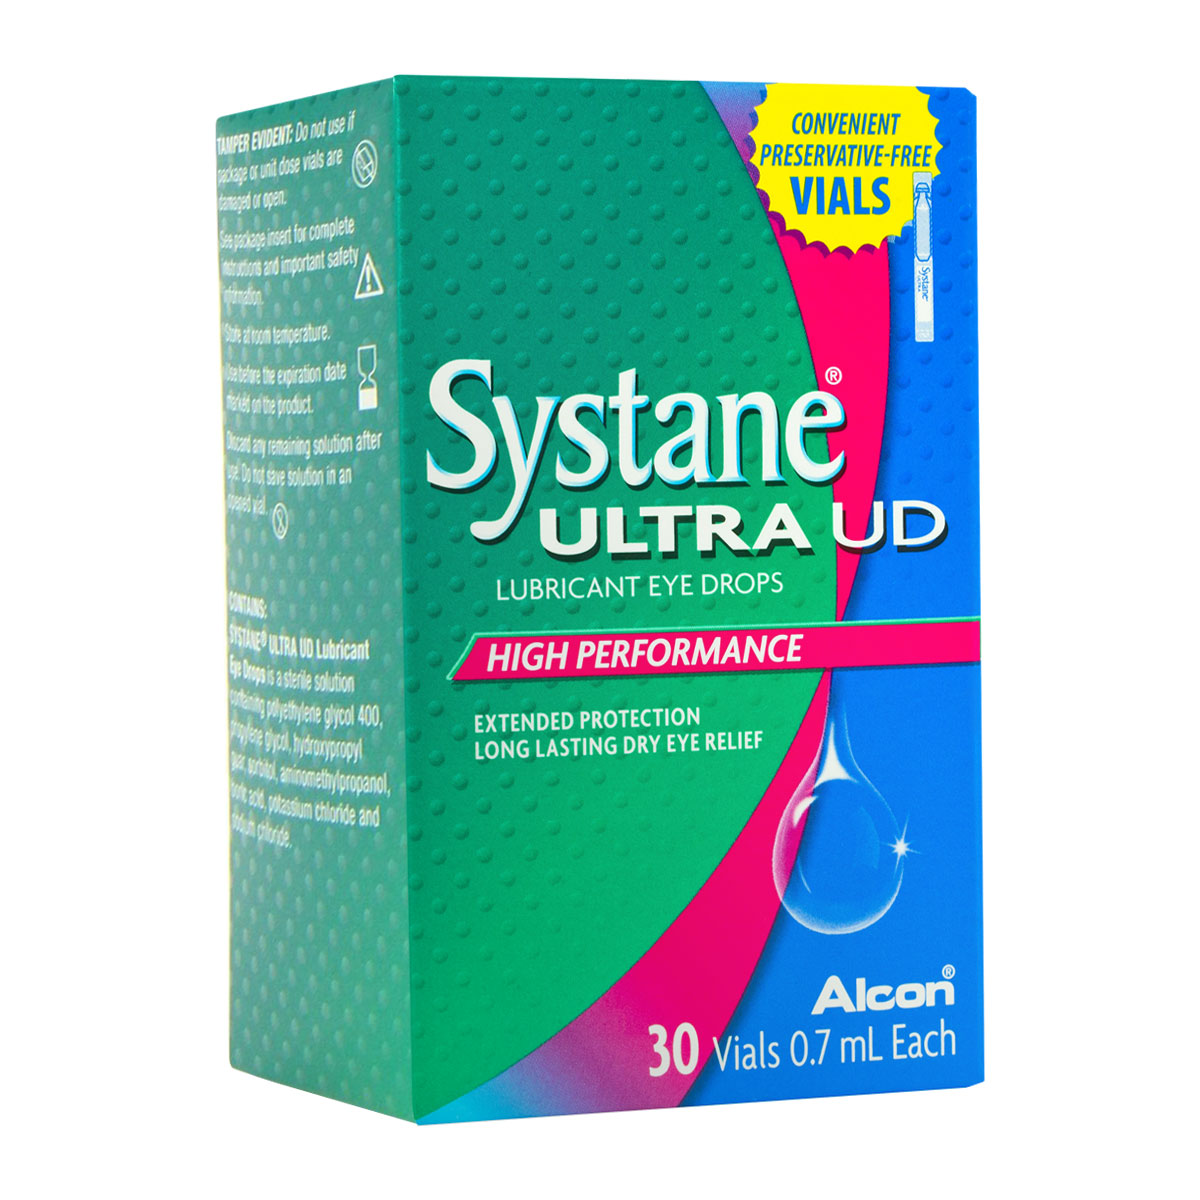 Image of Systane Ultra Eye Drops Vials 3007ml